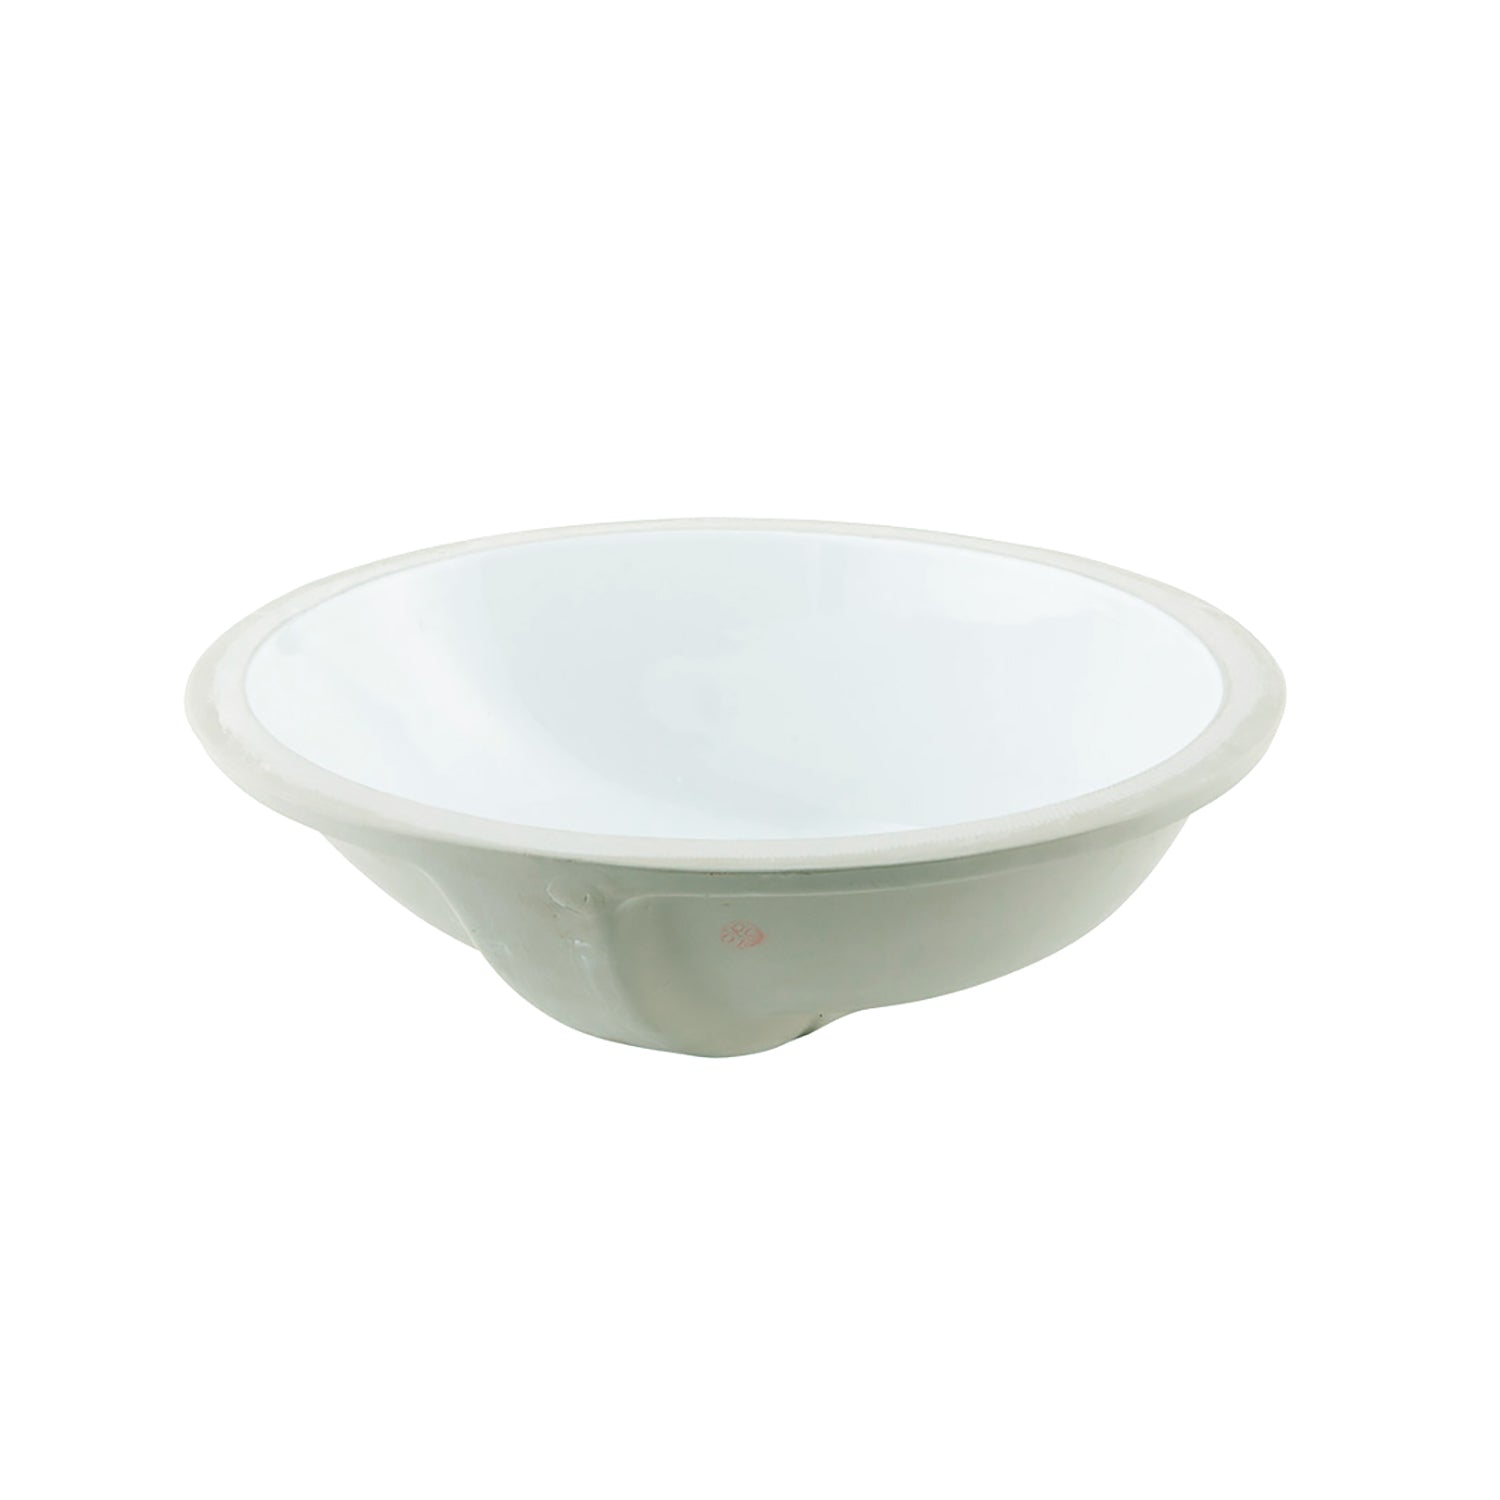 DAX Ceramic Oval Single Bowl Undermount Bathroom Sink, Ivory Finish, 18-1/16 x 15-13/16 x 8-3/16 Inches (BSN-101)